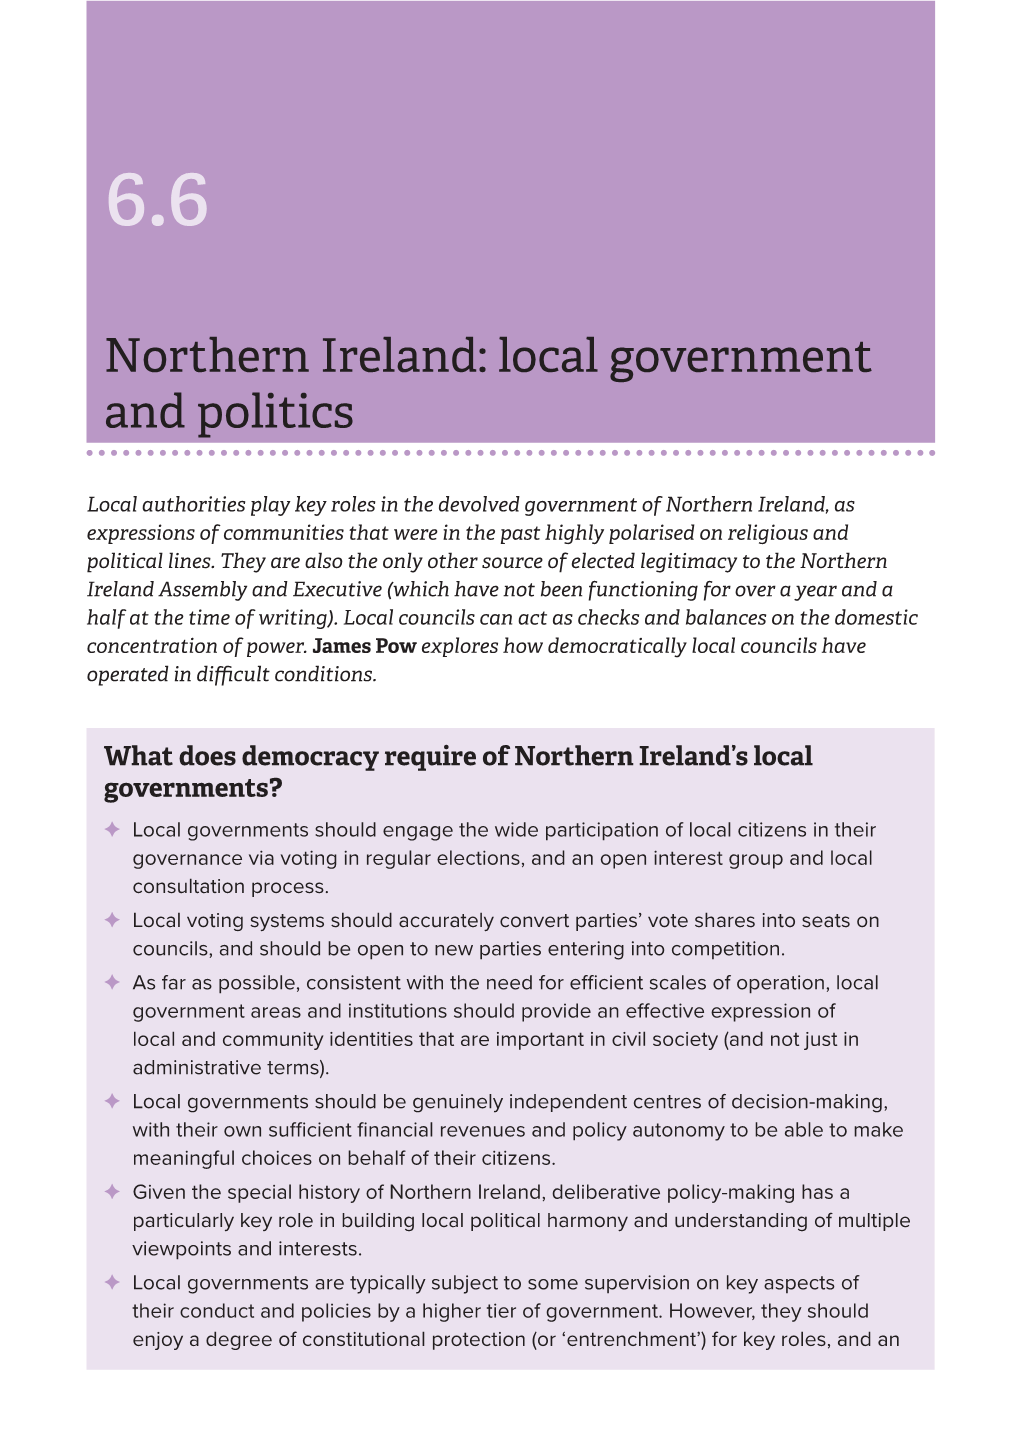 Northern Ireland: Local Government and Politics